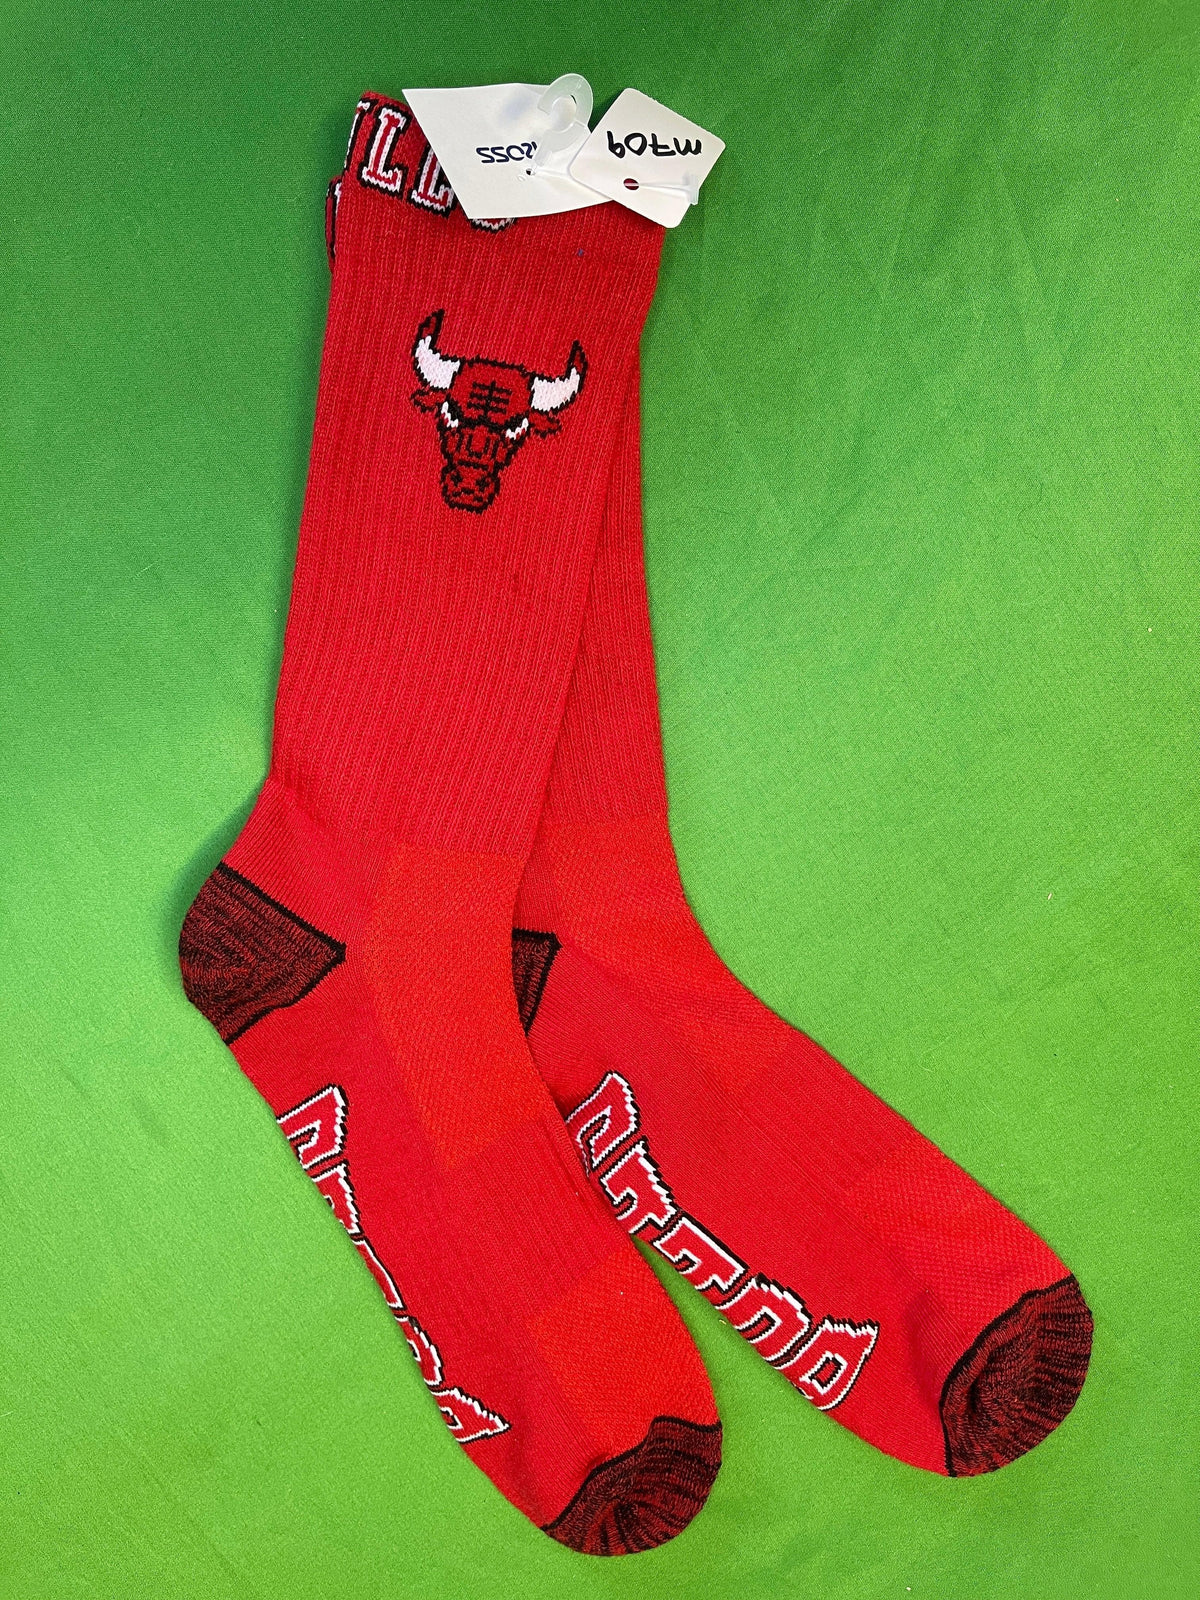 NBA Chicago Bulls Red Ribbed Crew Socks OSFM NWT